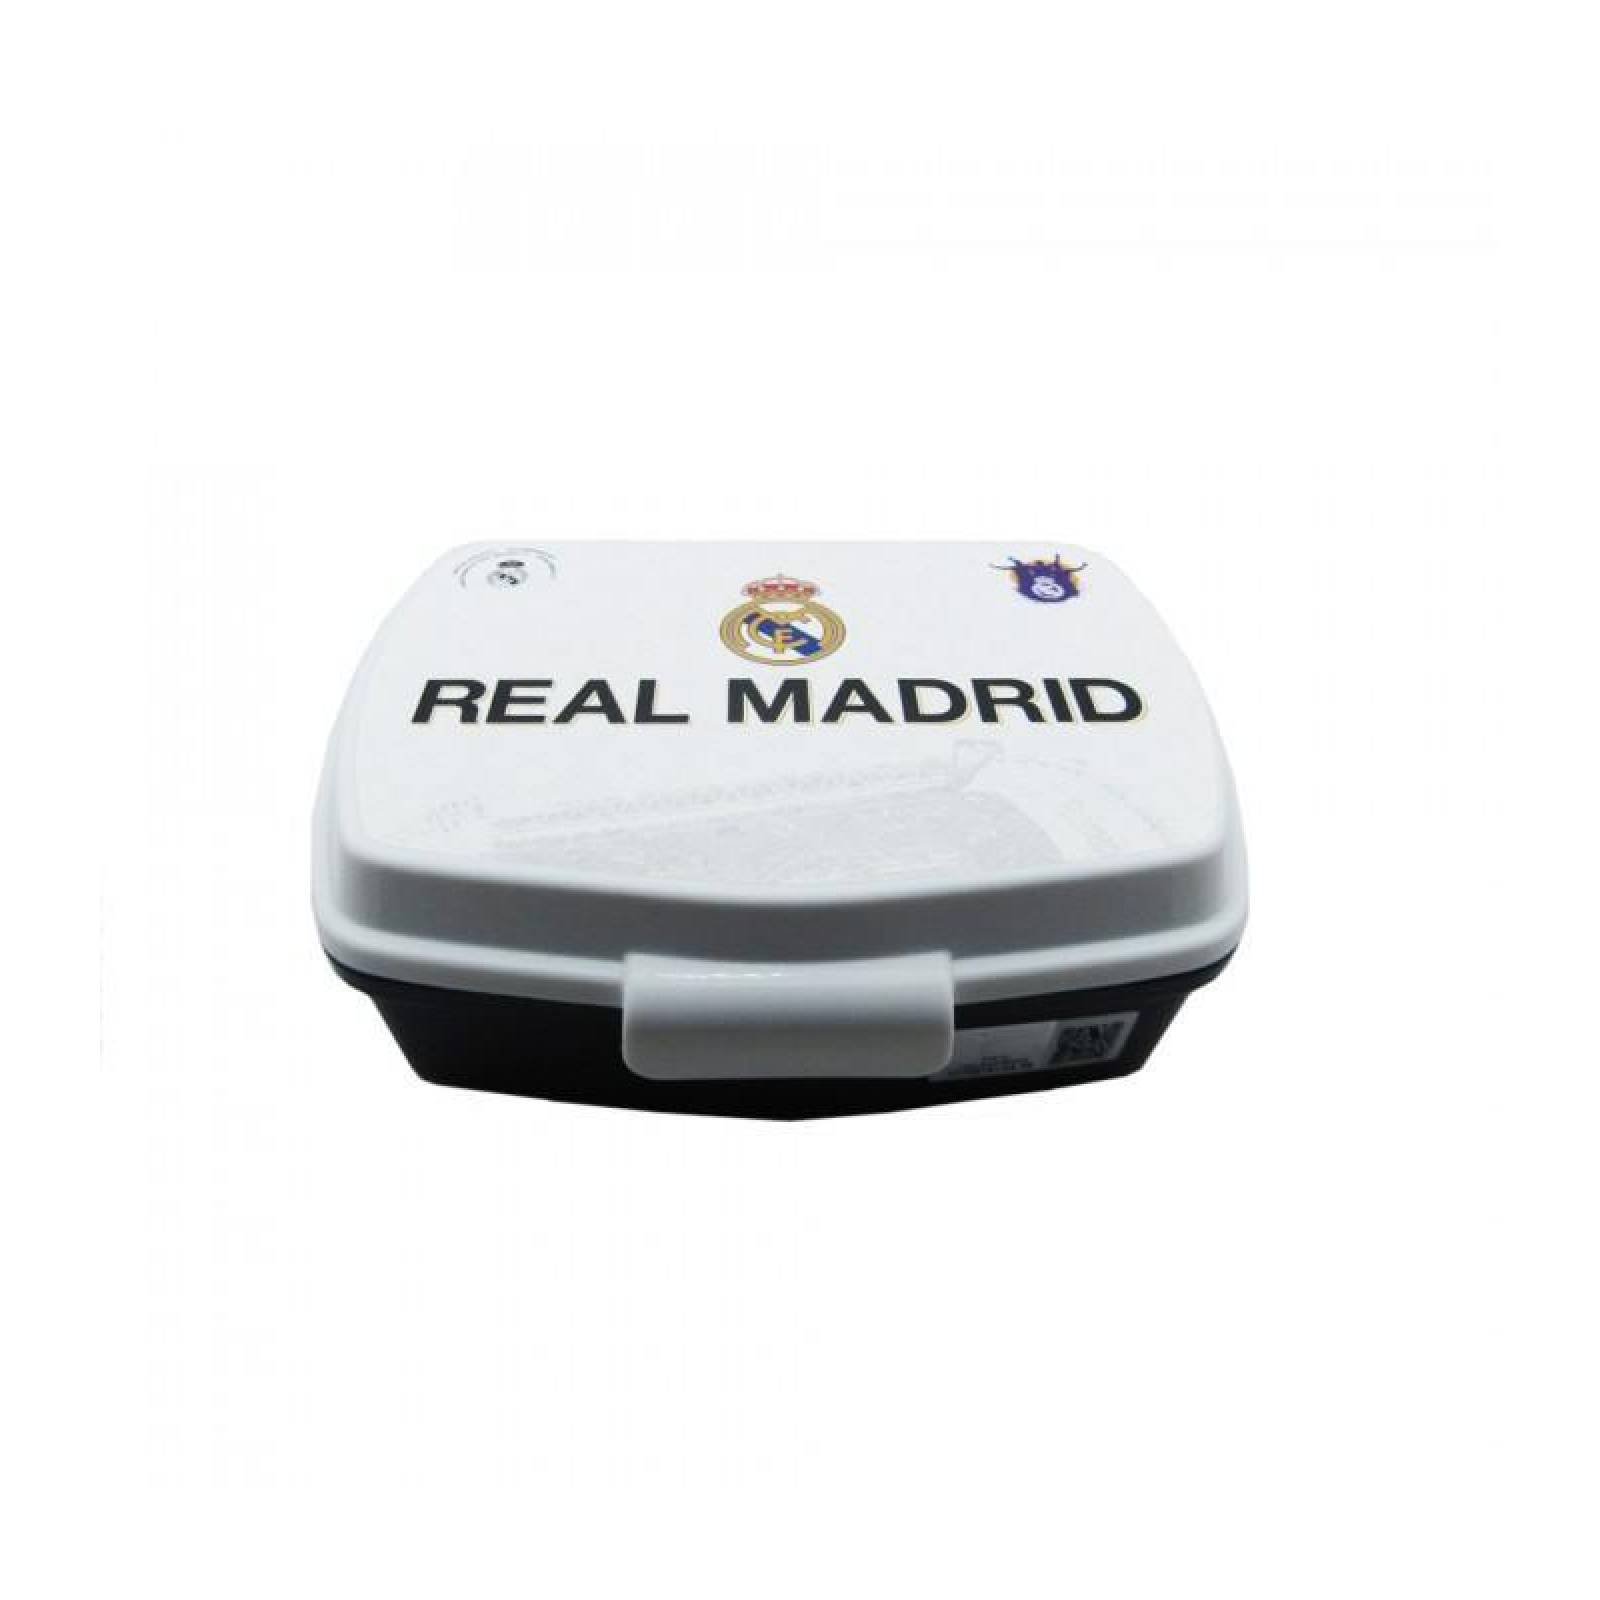 Lonchera rectangular de Futbol Real Madrid 